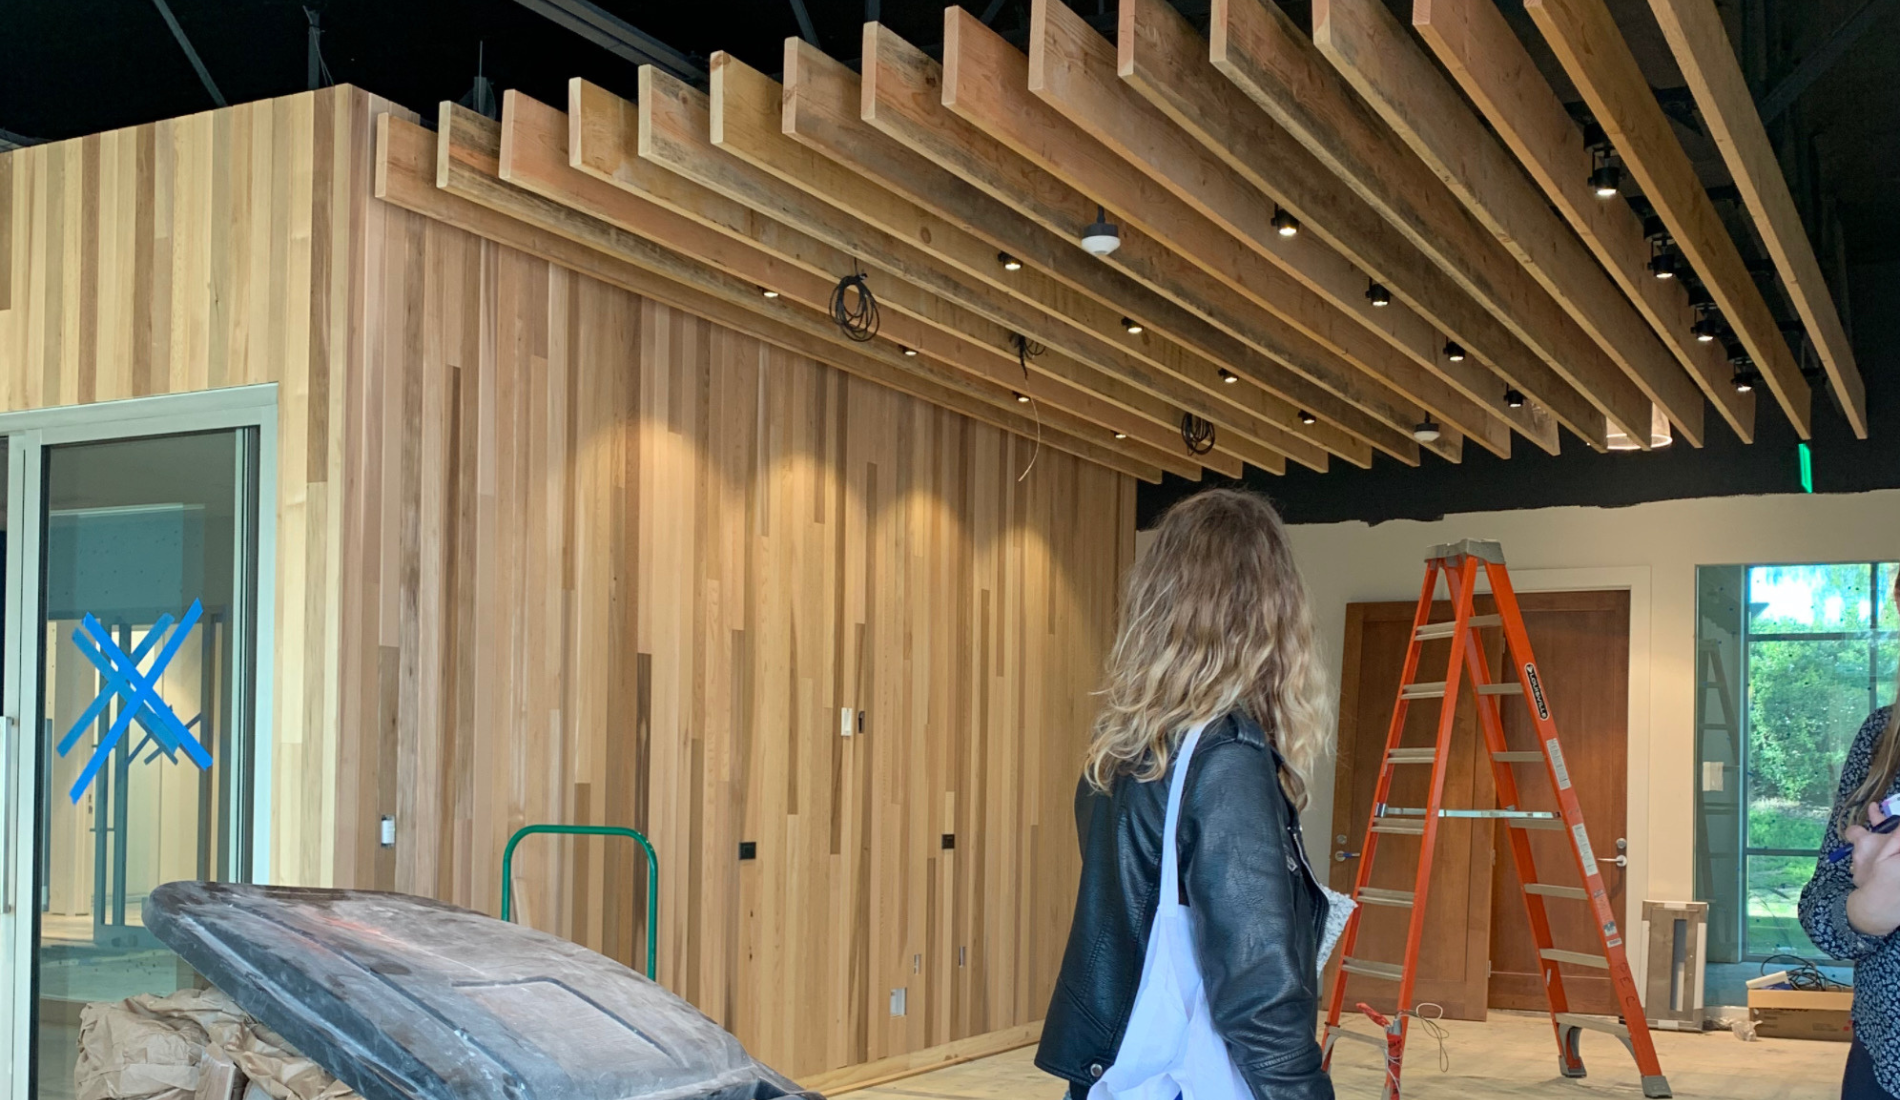 San Diego interior design project, wood walls